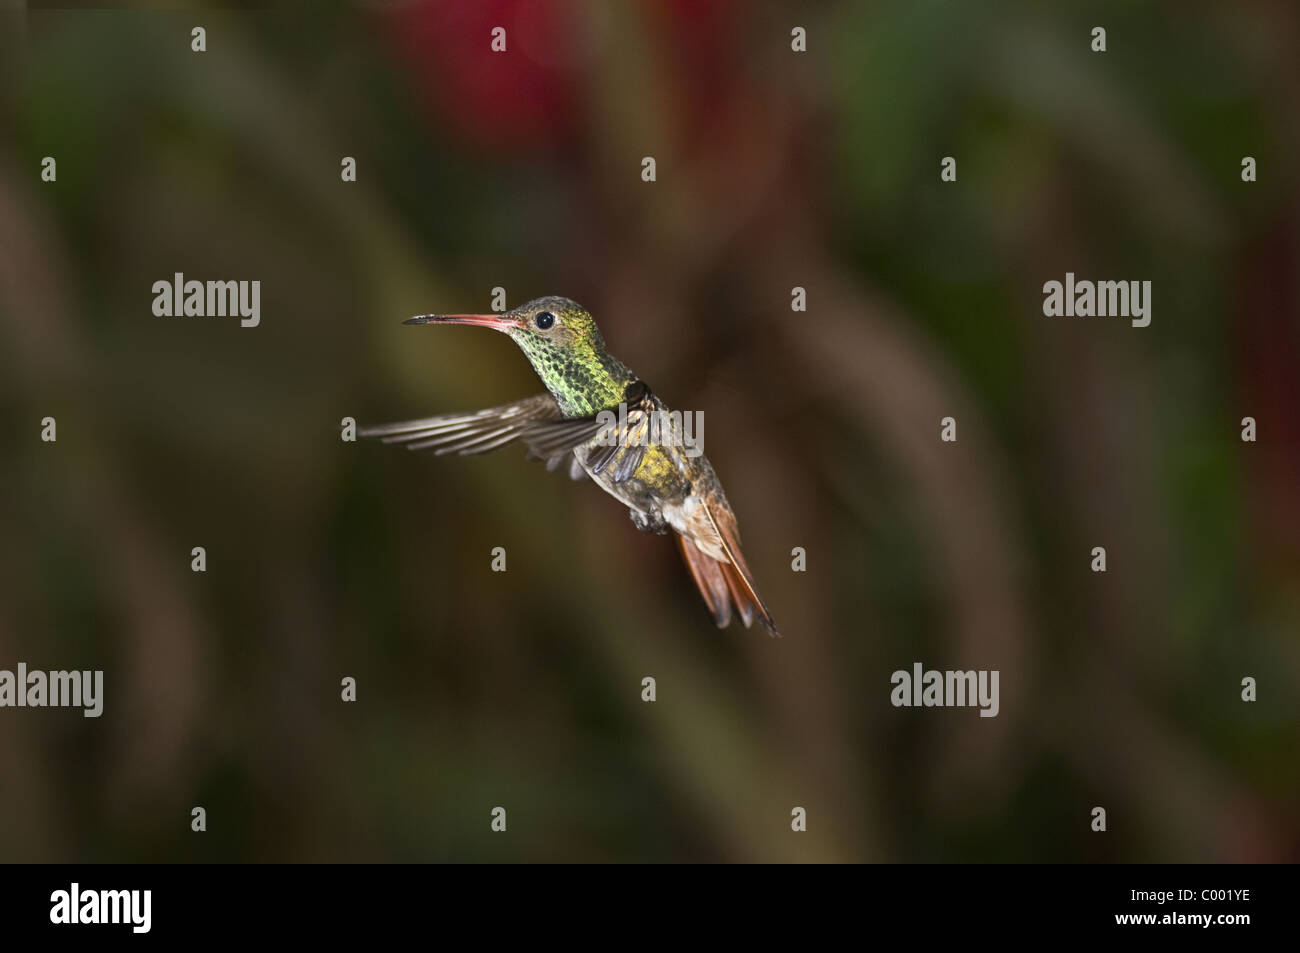 Hummingbird, Mid flight, Mindo, Ecuador. Stock Photo